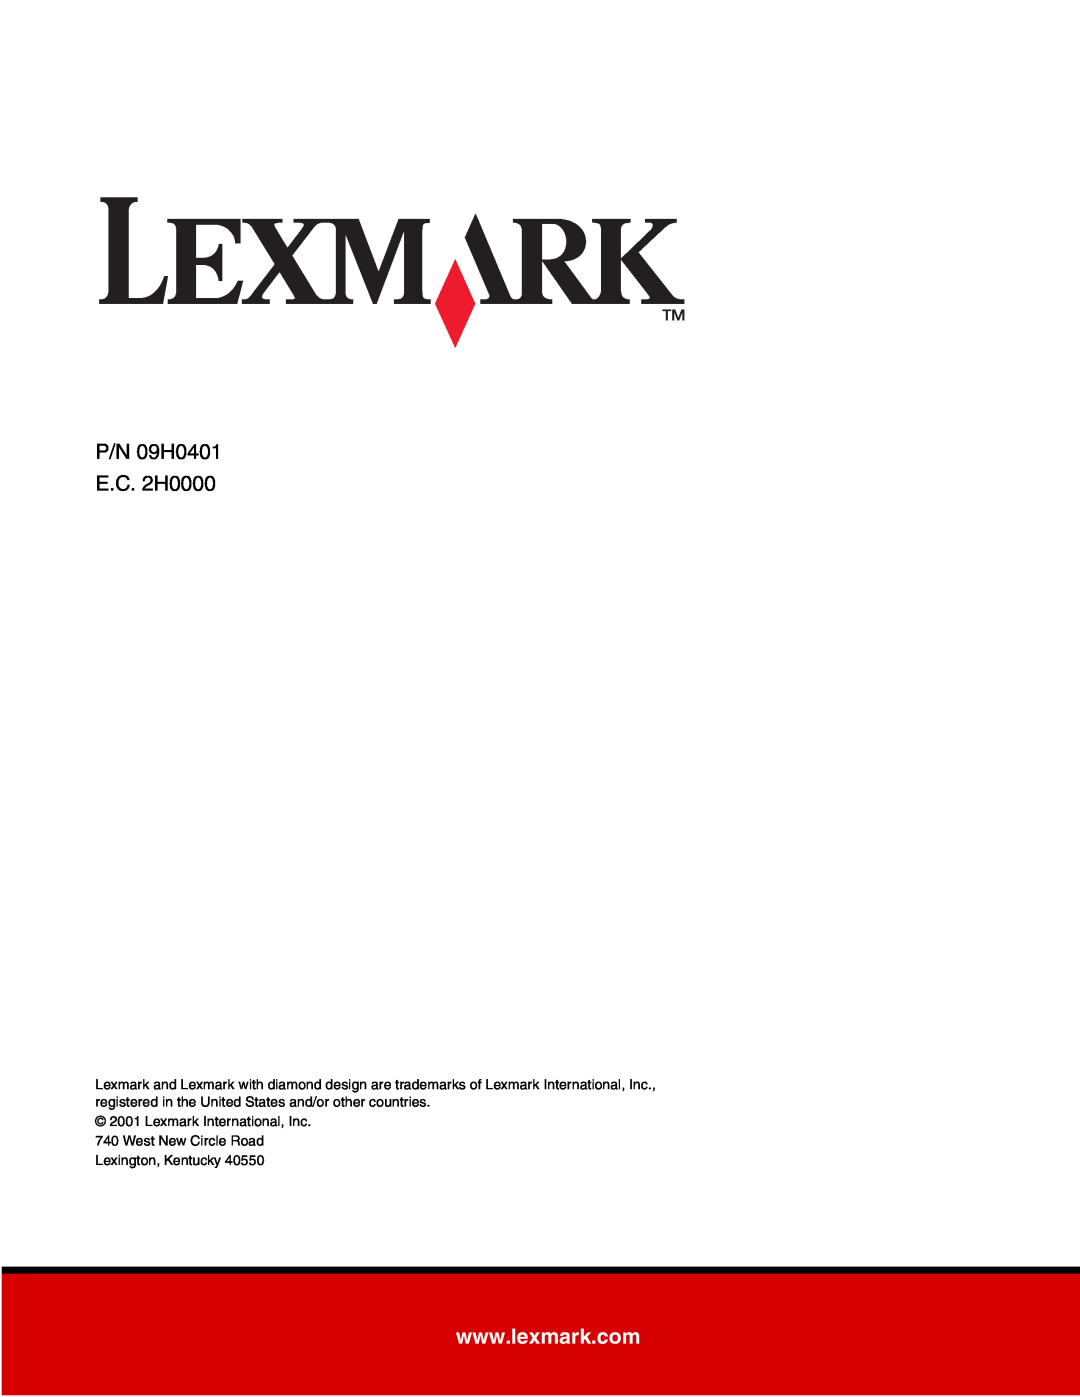 Lexmark 522 setup guide P/N 09H0401 E.C. 2H0000, Lexmark International, Inc 740 West New Circle Road, Lexington, Kentucky 